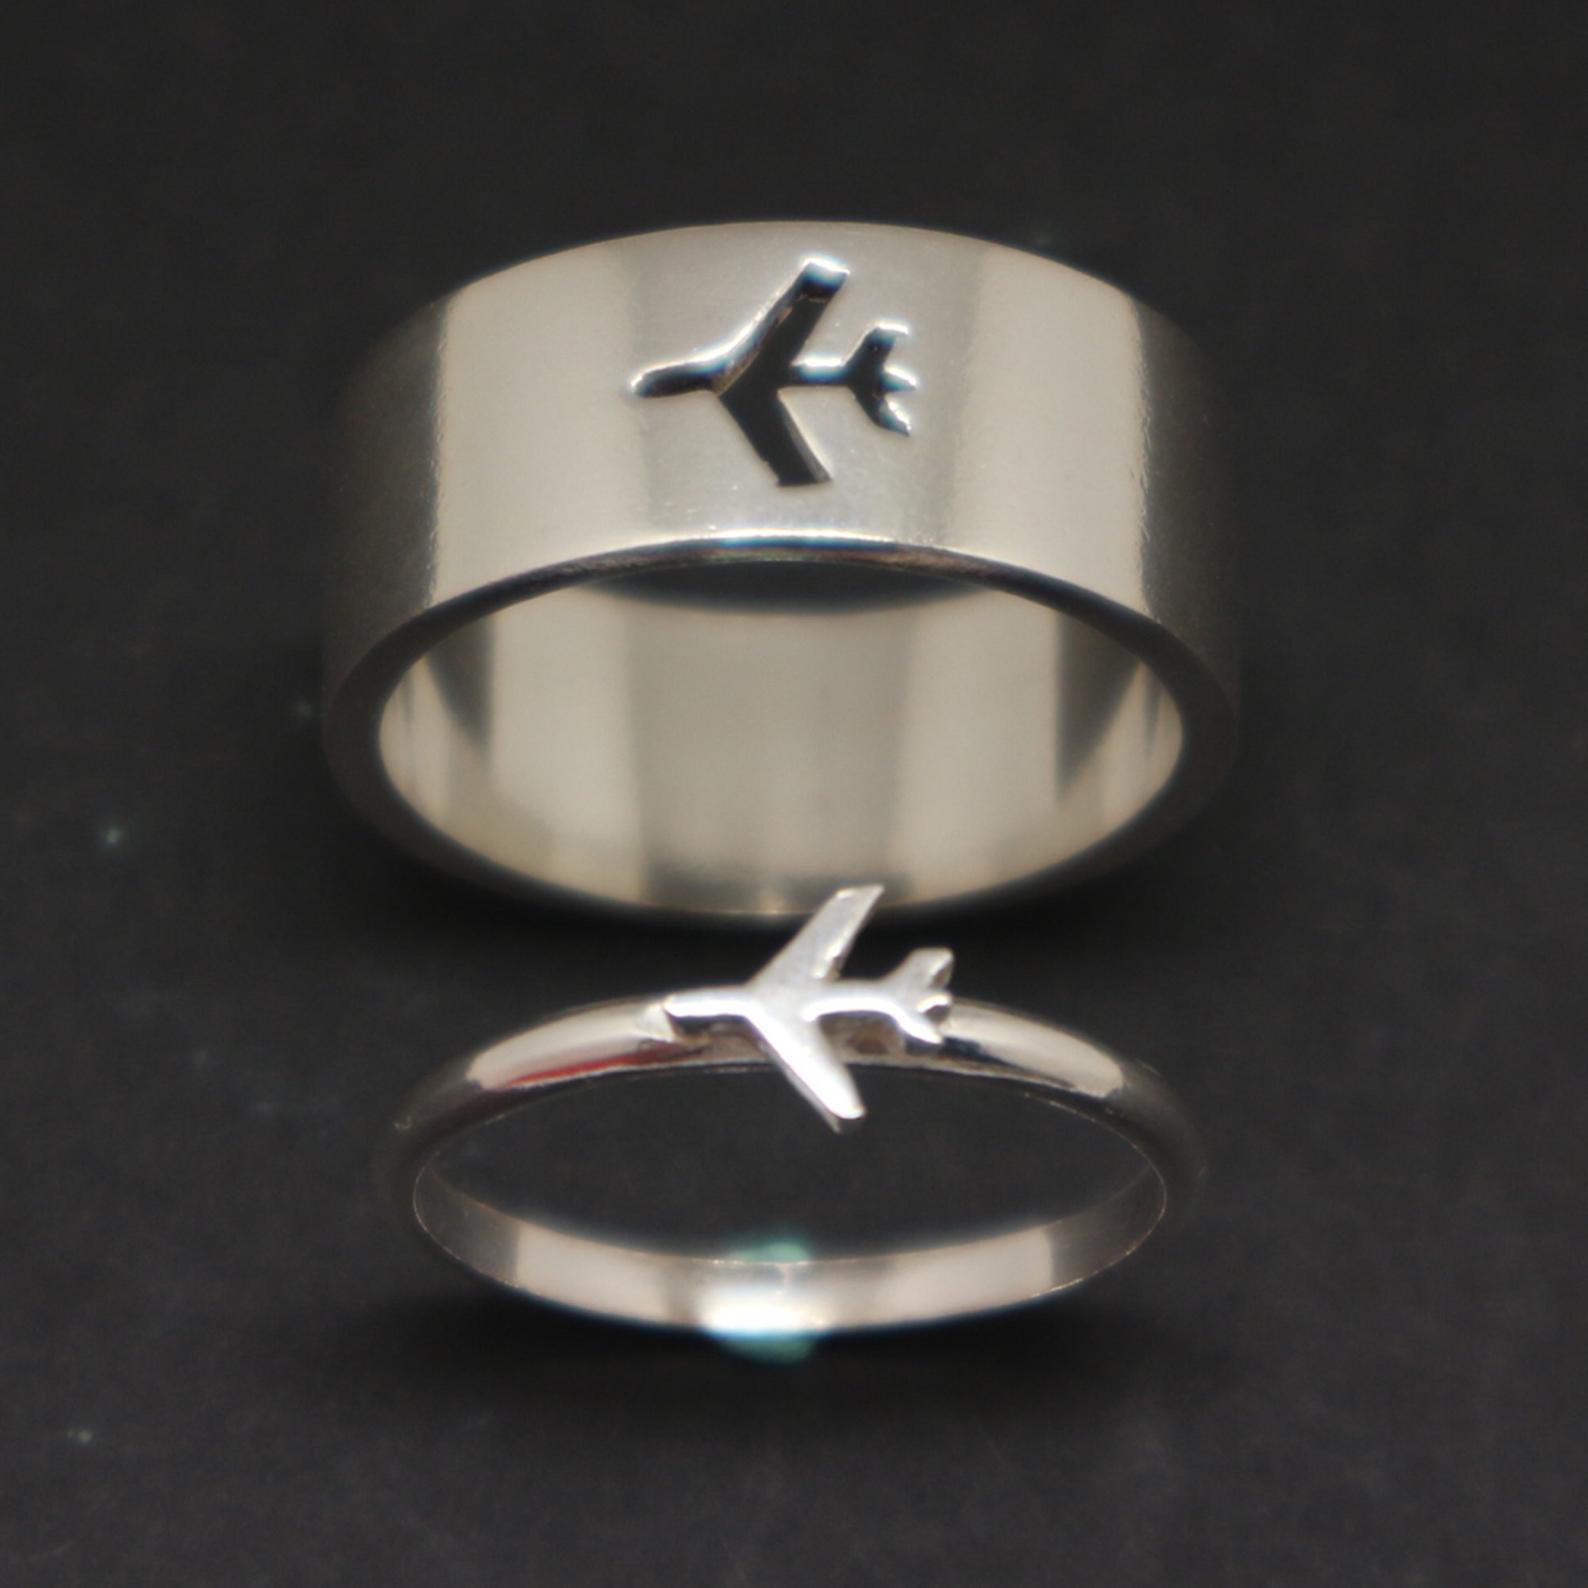 plane rings, plane jewelry, aviation jewelry, flight attendant gifts, pilot gifts, couple gift, travel